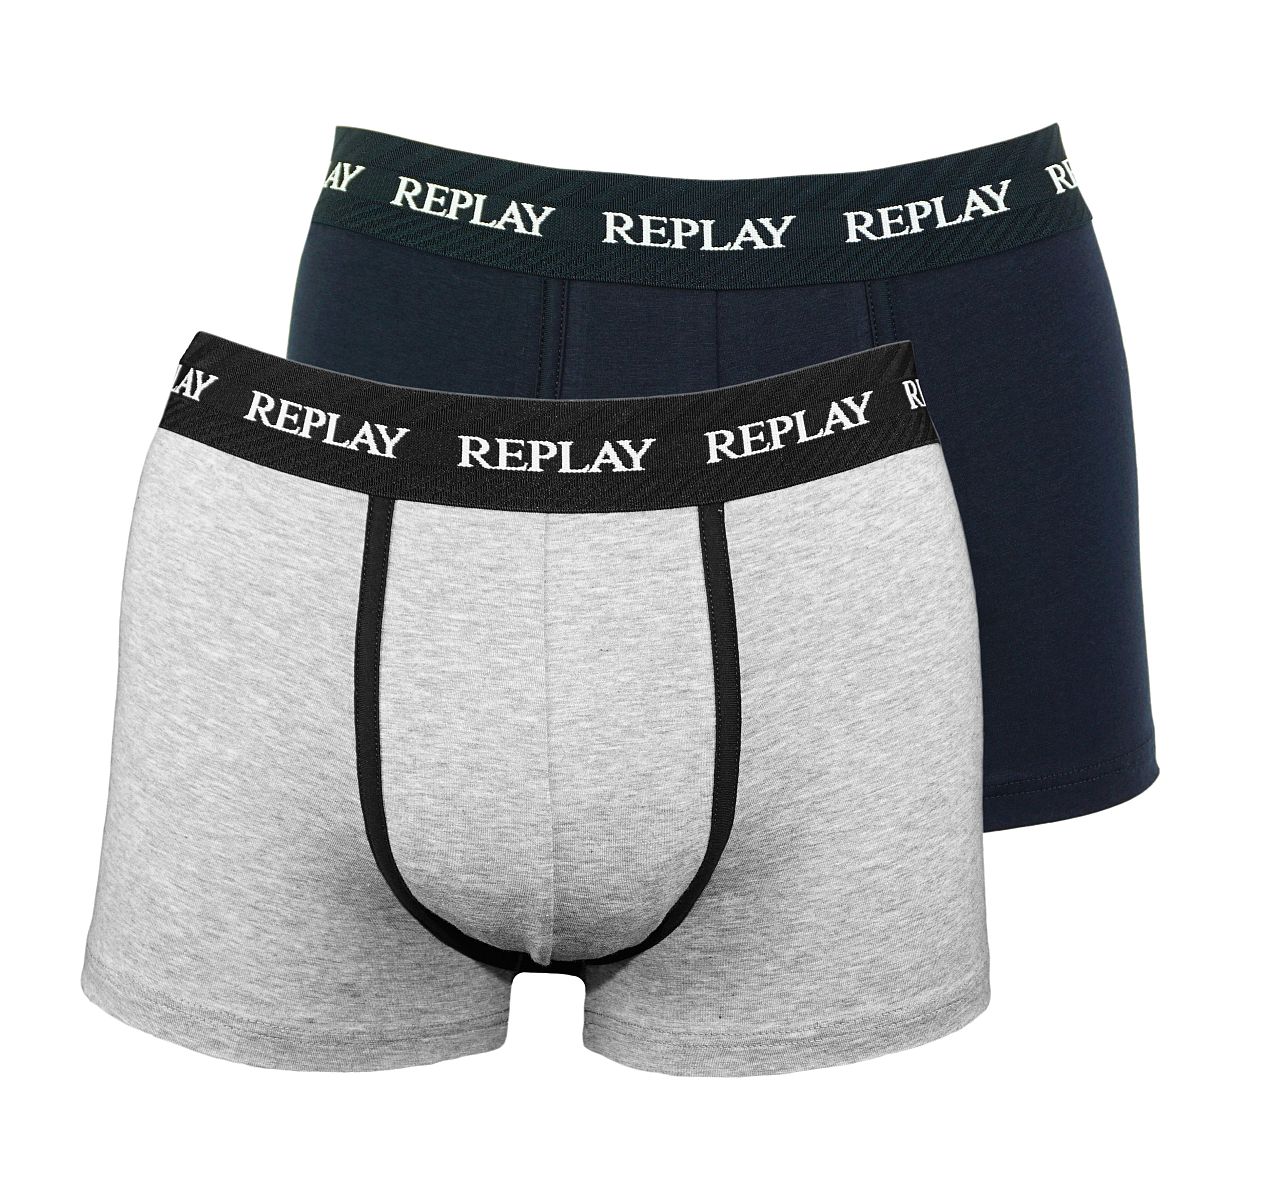 Replay 2er Pack Shorts Trunks Boxershorts M601211 MG4 grau, schwarz W18-RY1